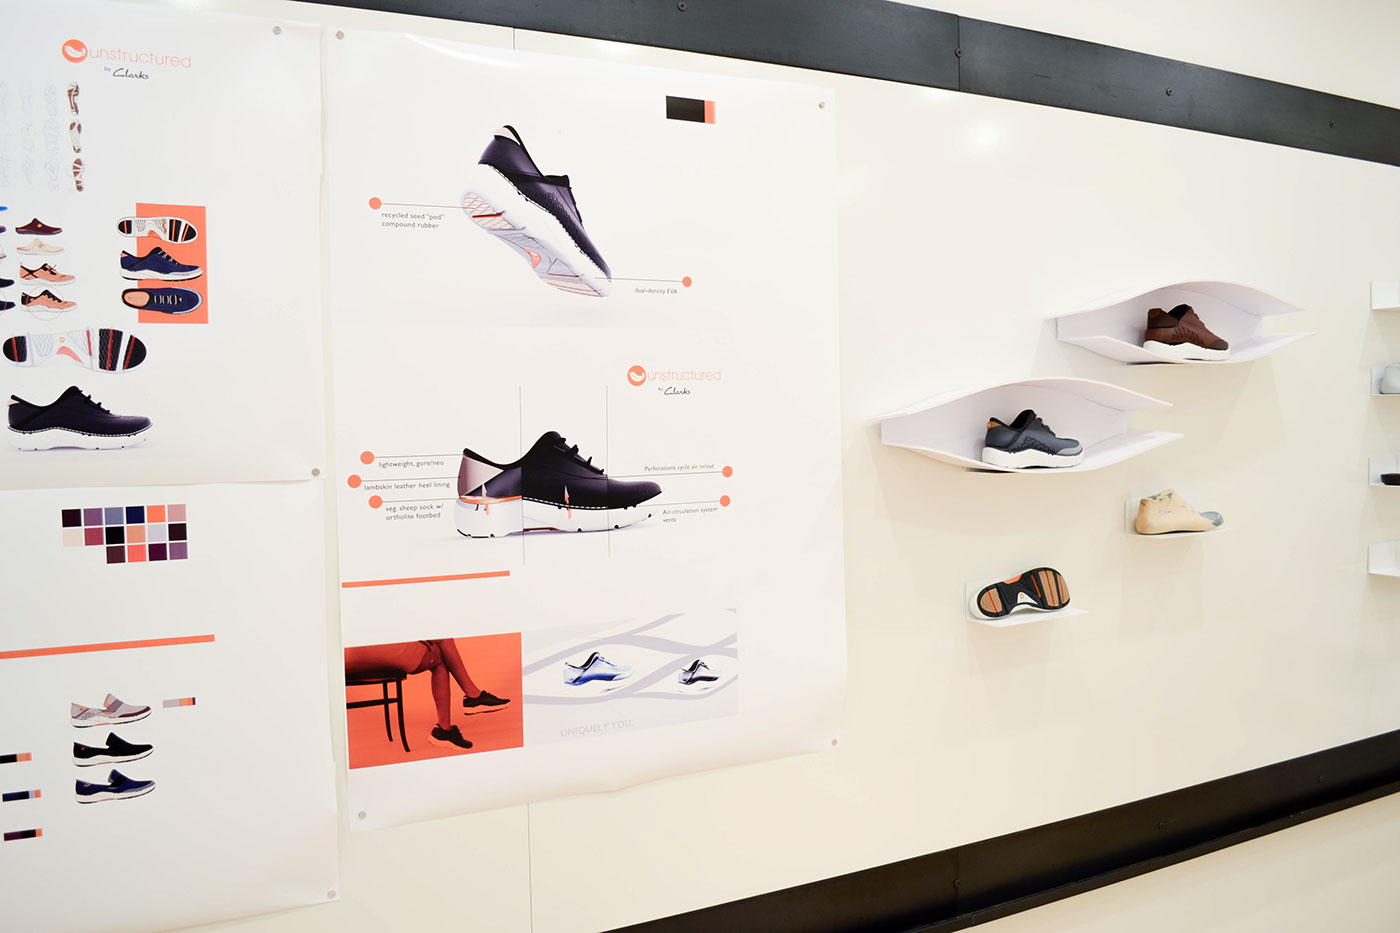 footwear Clarks shoes risd design conceptkicks redesign sneaker womens internship